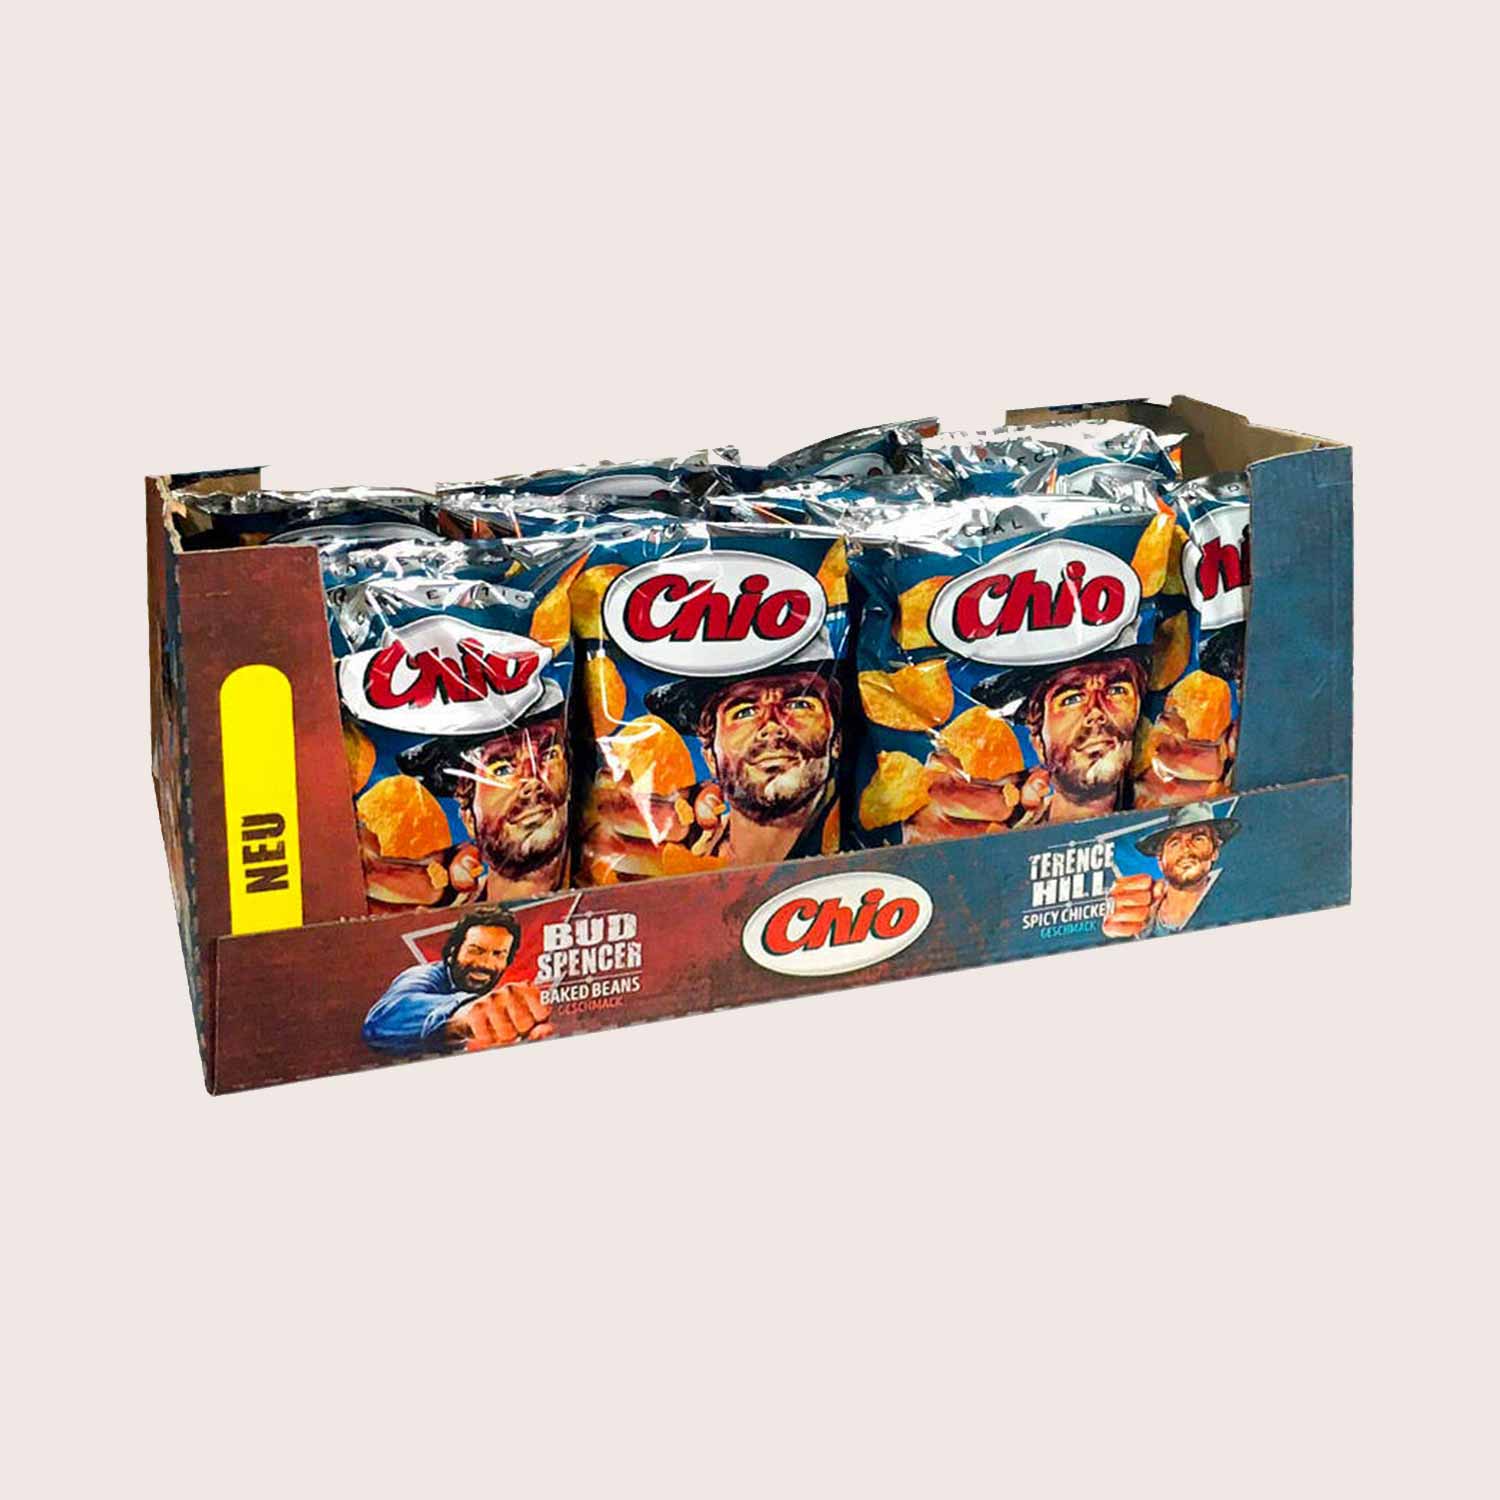 Snack packaging for crisp bags